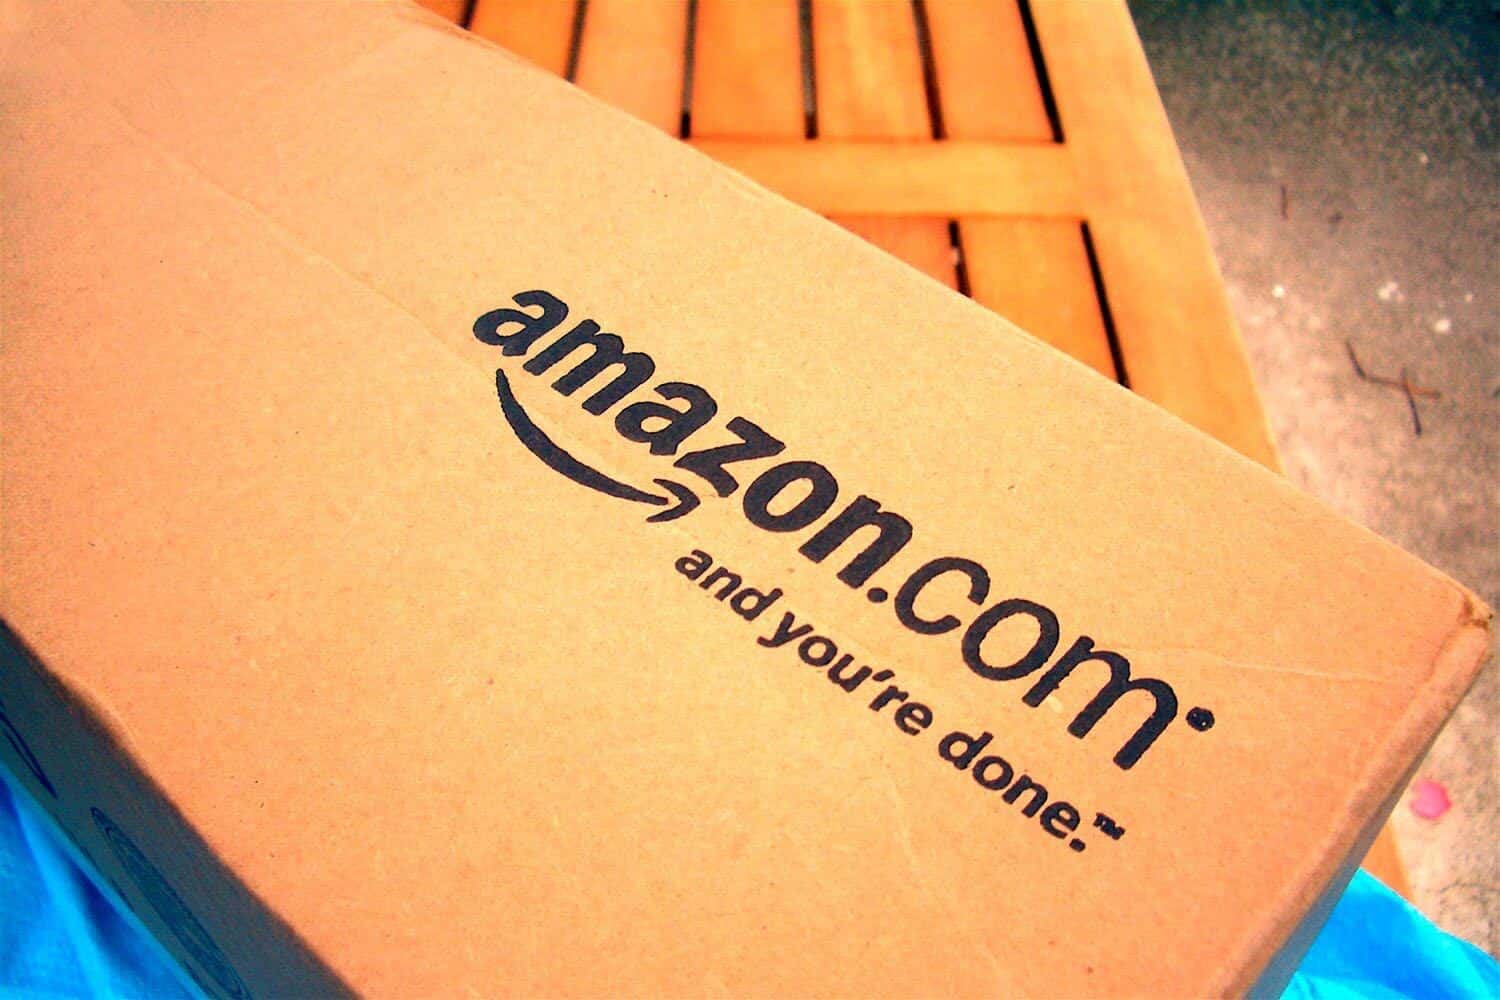 Amazon.com Inc (NASDAQ:AMZN)